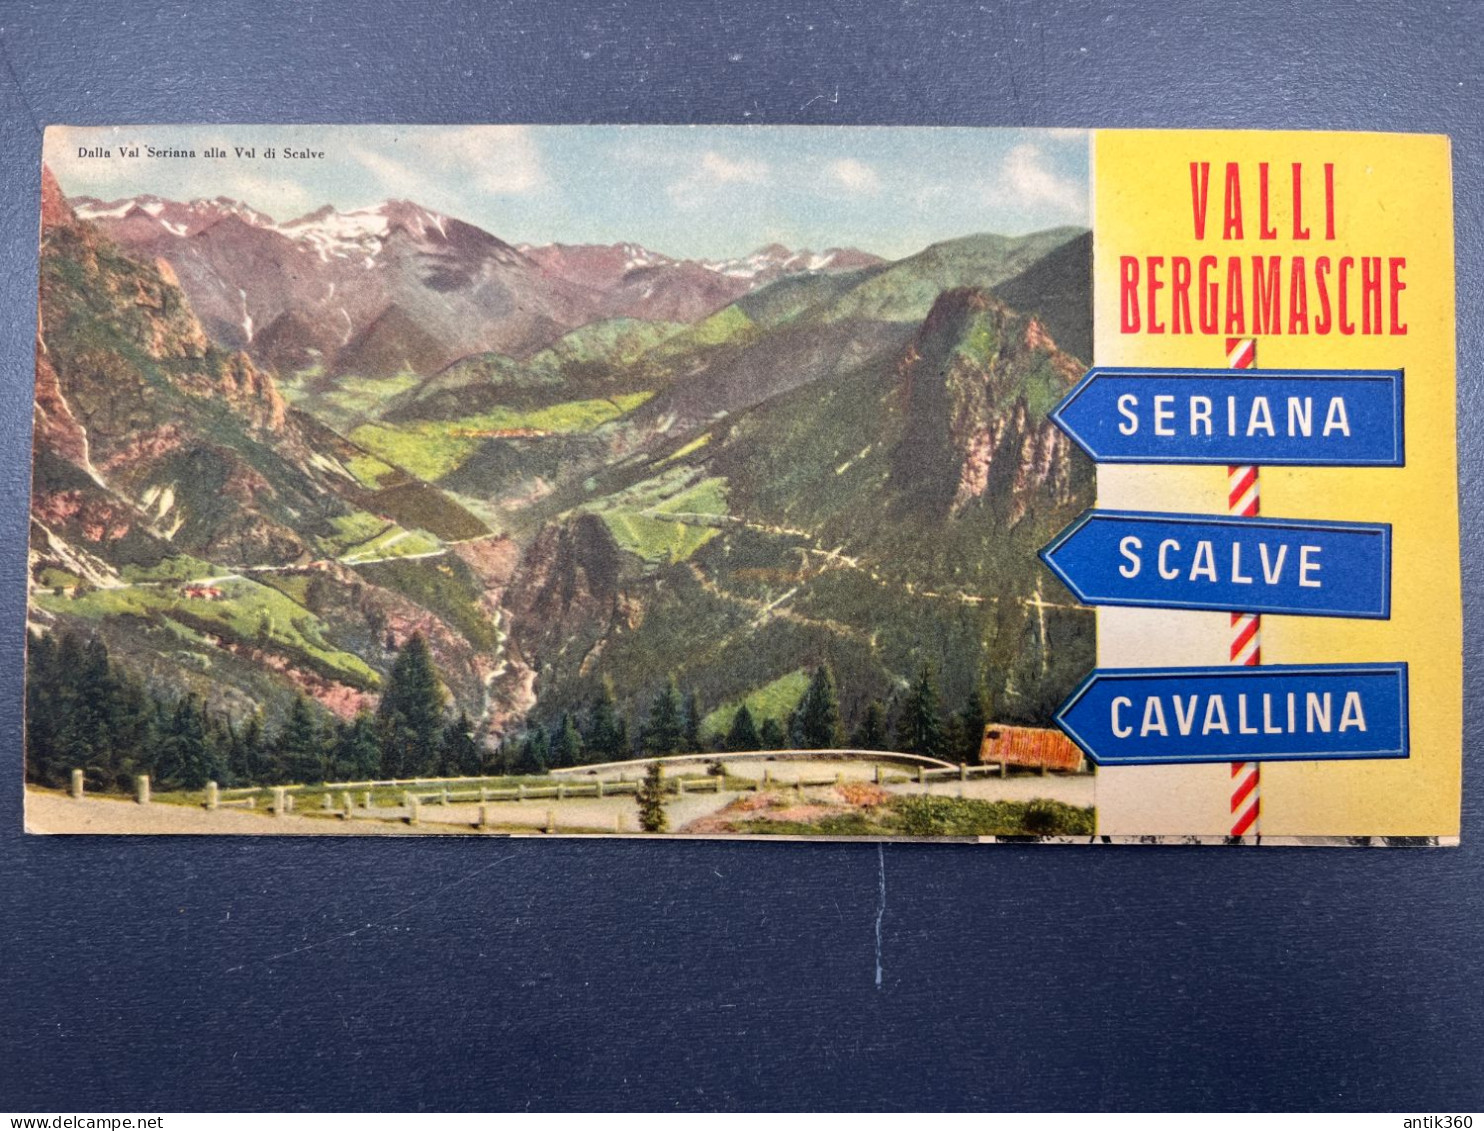 Ancien Dépliant Touristique Pop-Up Valli Bergamasche Seriana Scalve Cavallina Italie - Cuadernillos Turísticos